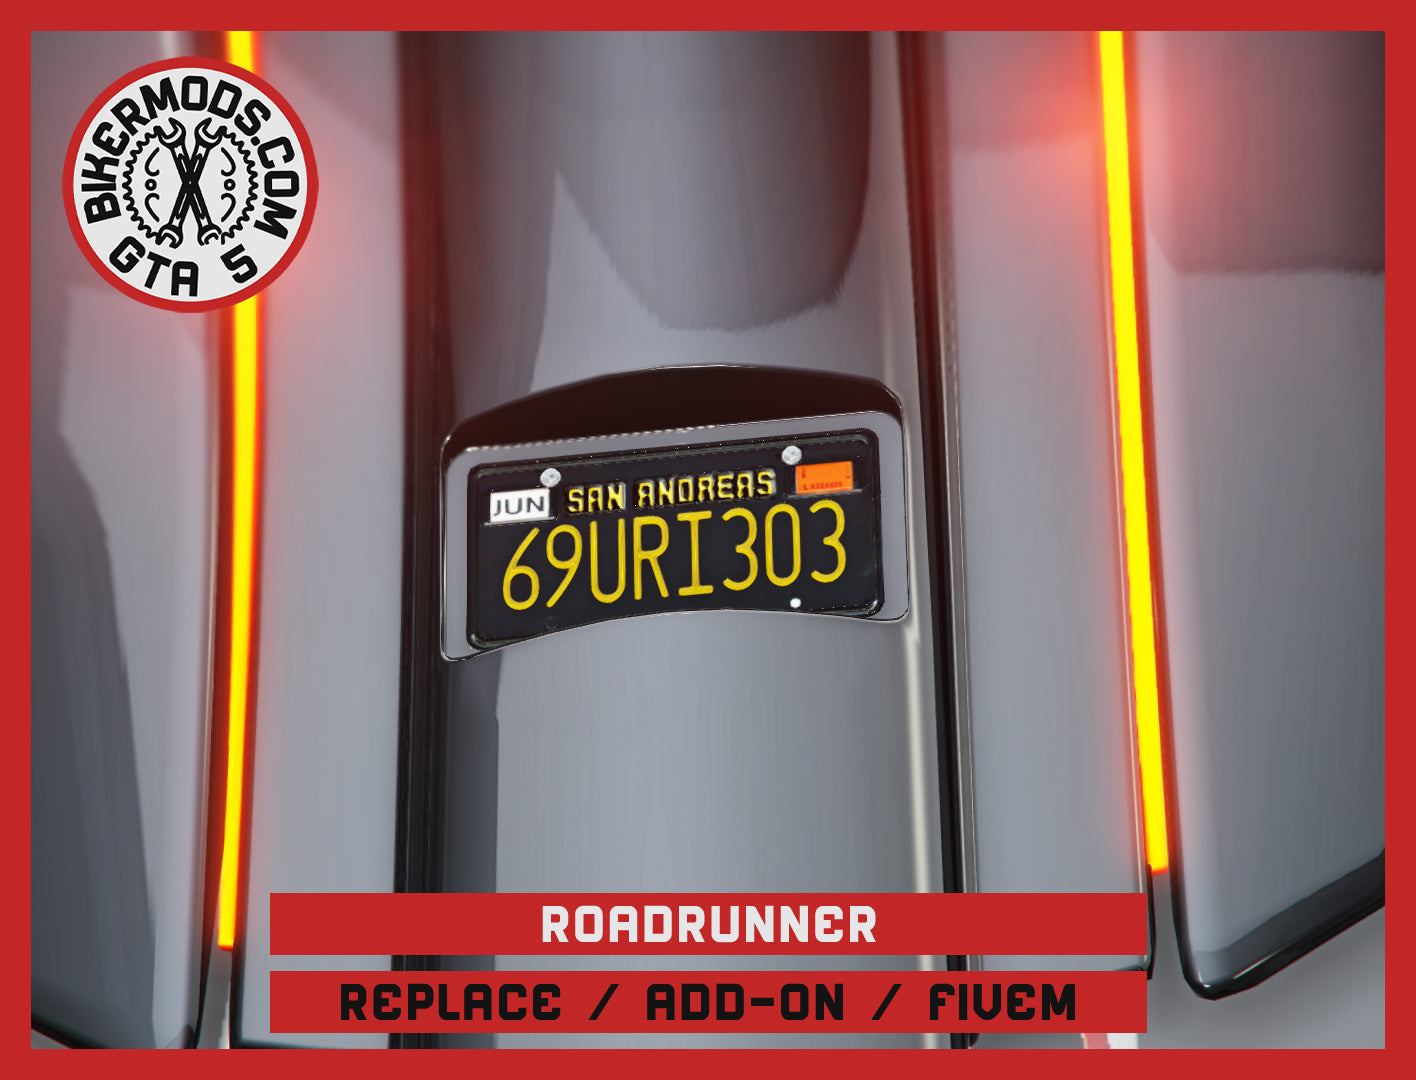 Roadrunner (Replace / Add On / FiveM) 226k Poly